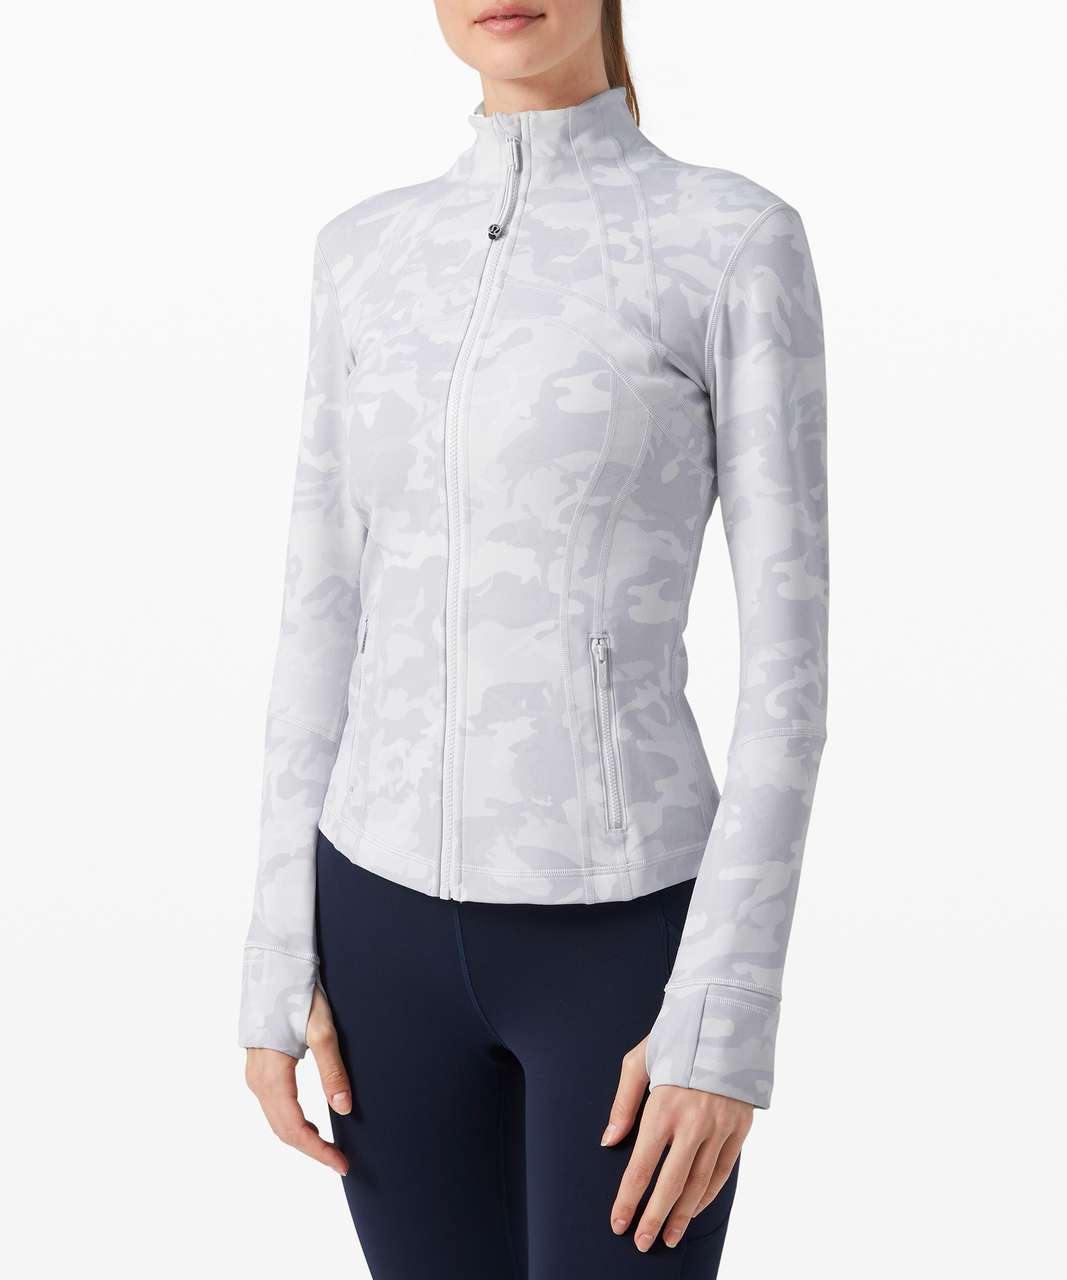 lululemon Define Jacket Incognito Camo Alpine White 6 - Athletic apparel